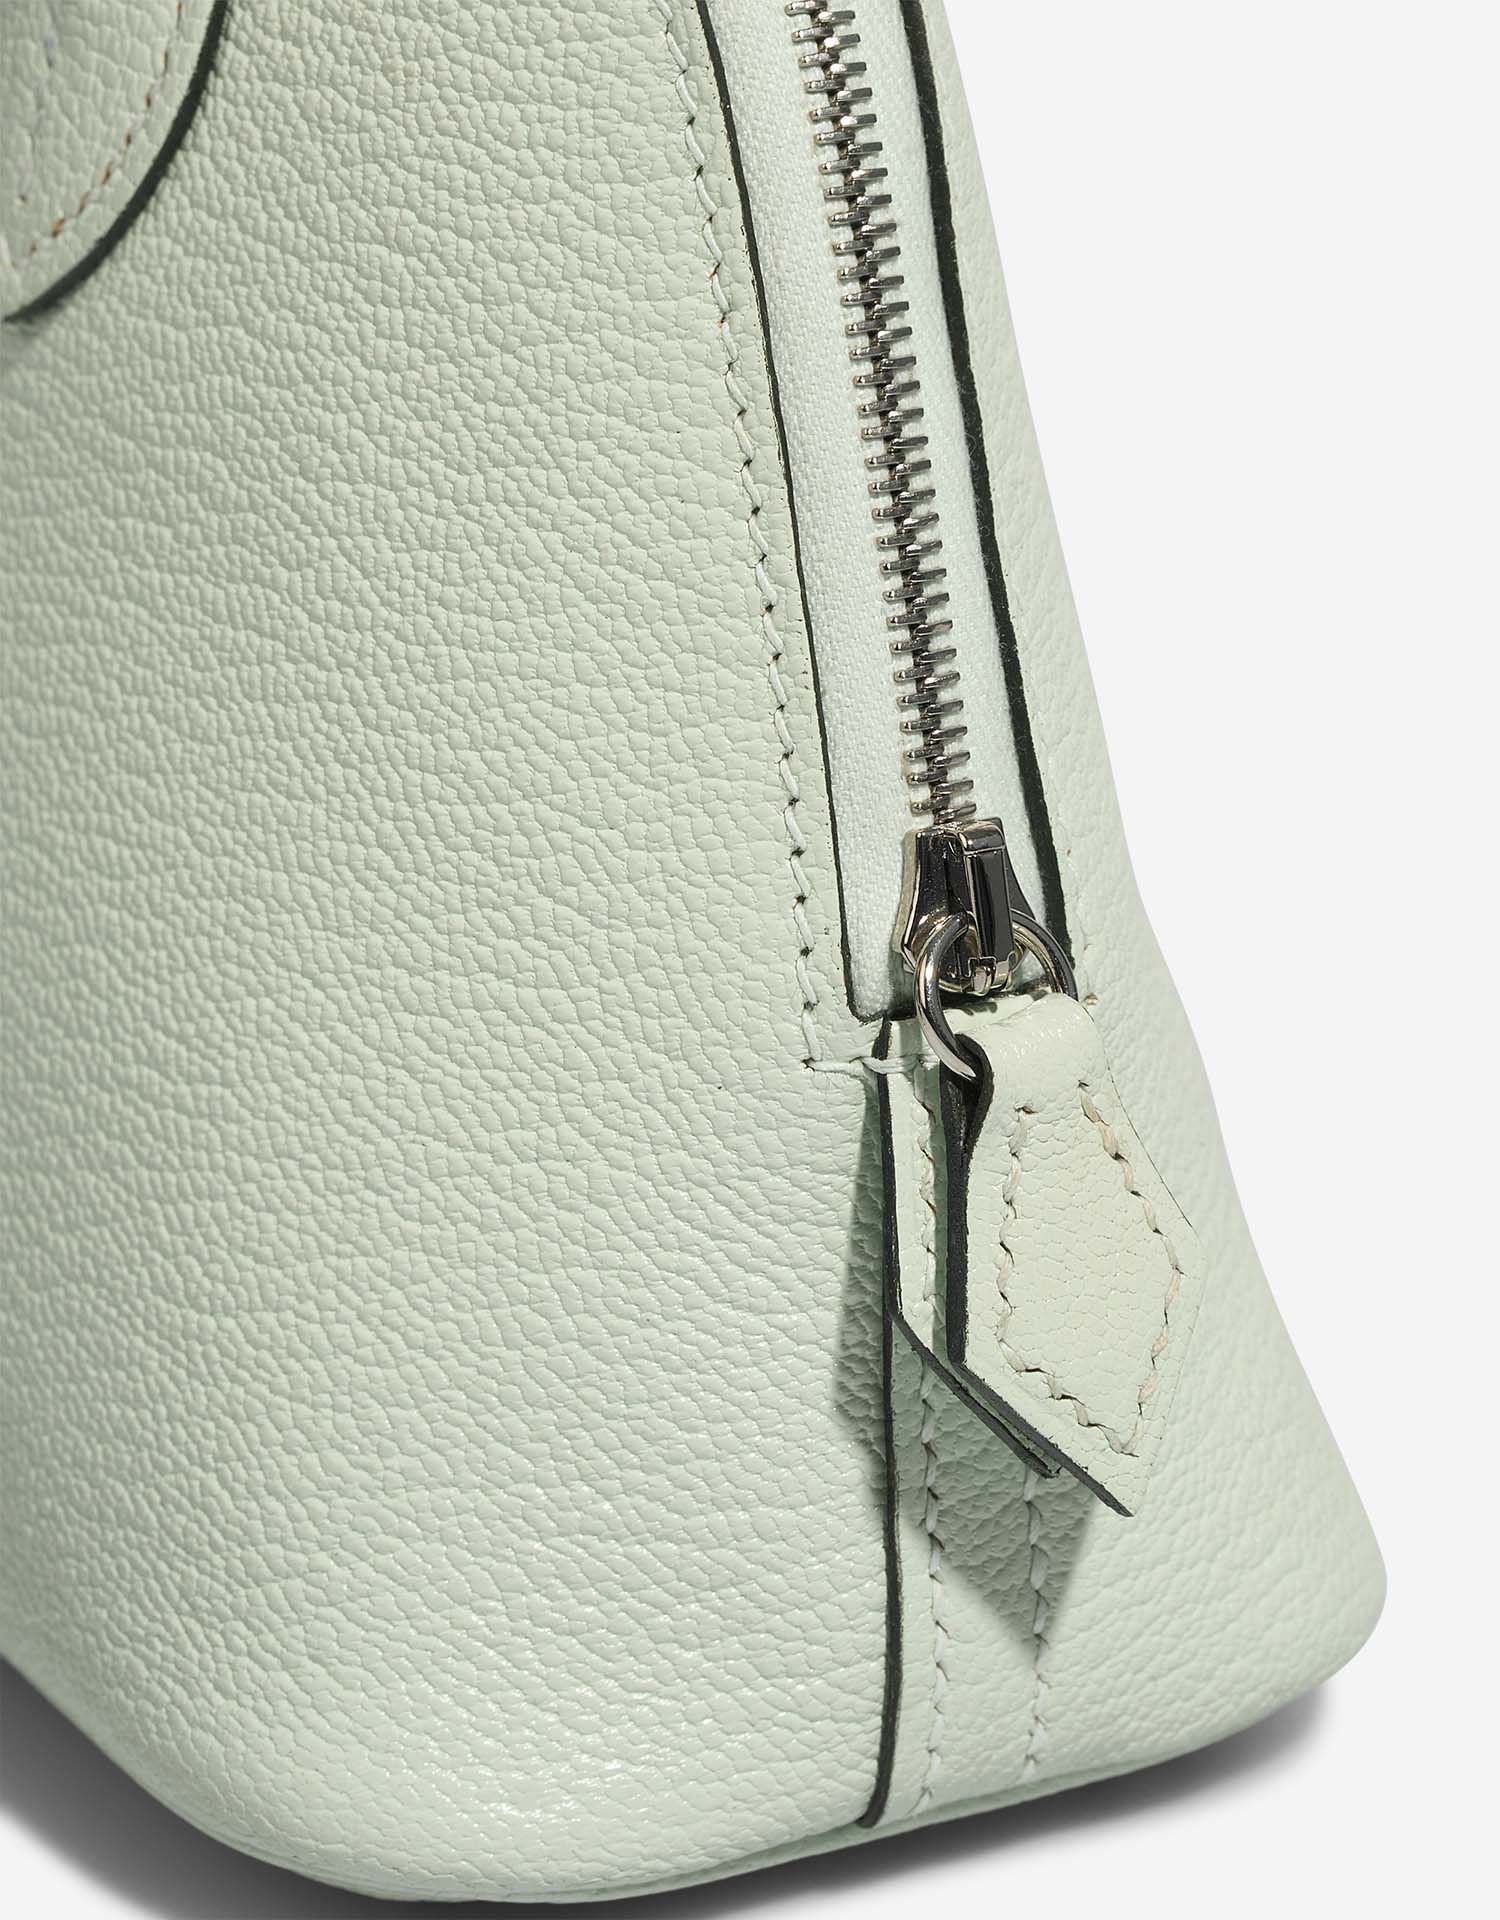 Hermès Bolide Mini VertFizz Closing System  | Sell your designer bag on Saclab.com